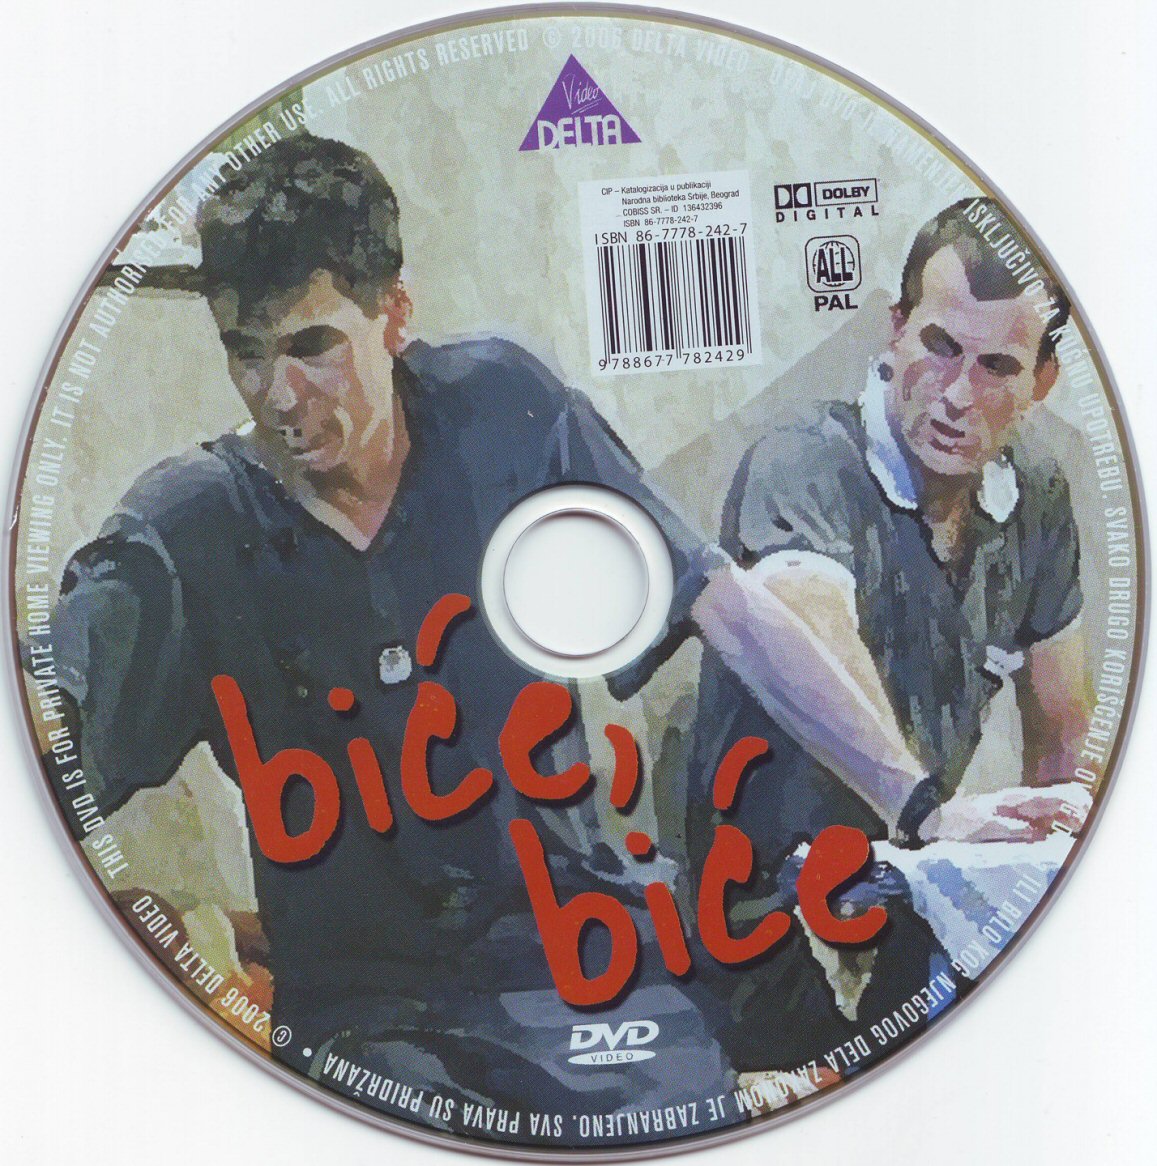 Click to view full size image -  DVD Cover - B - DVD - BICE BICE - CD (2) - DVD - BICE BICE - CD (2).jpg